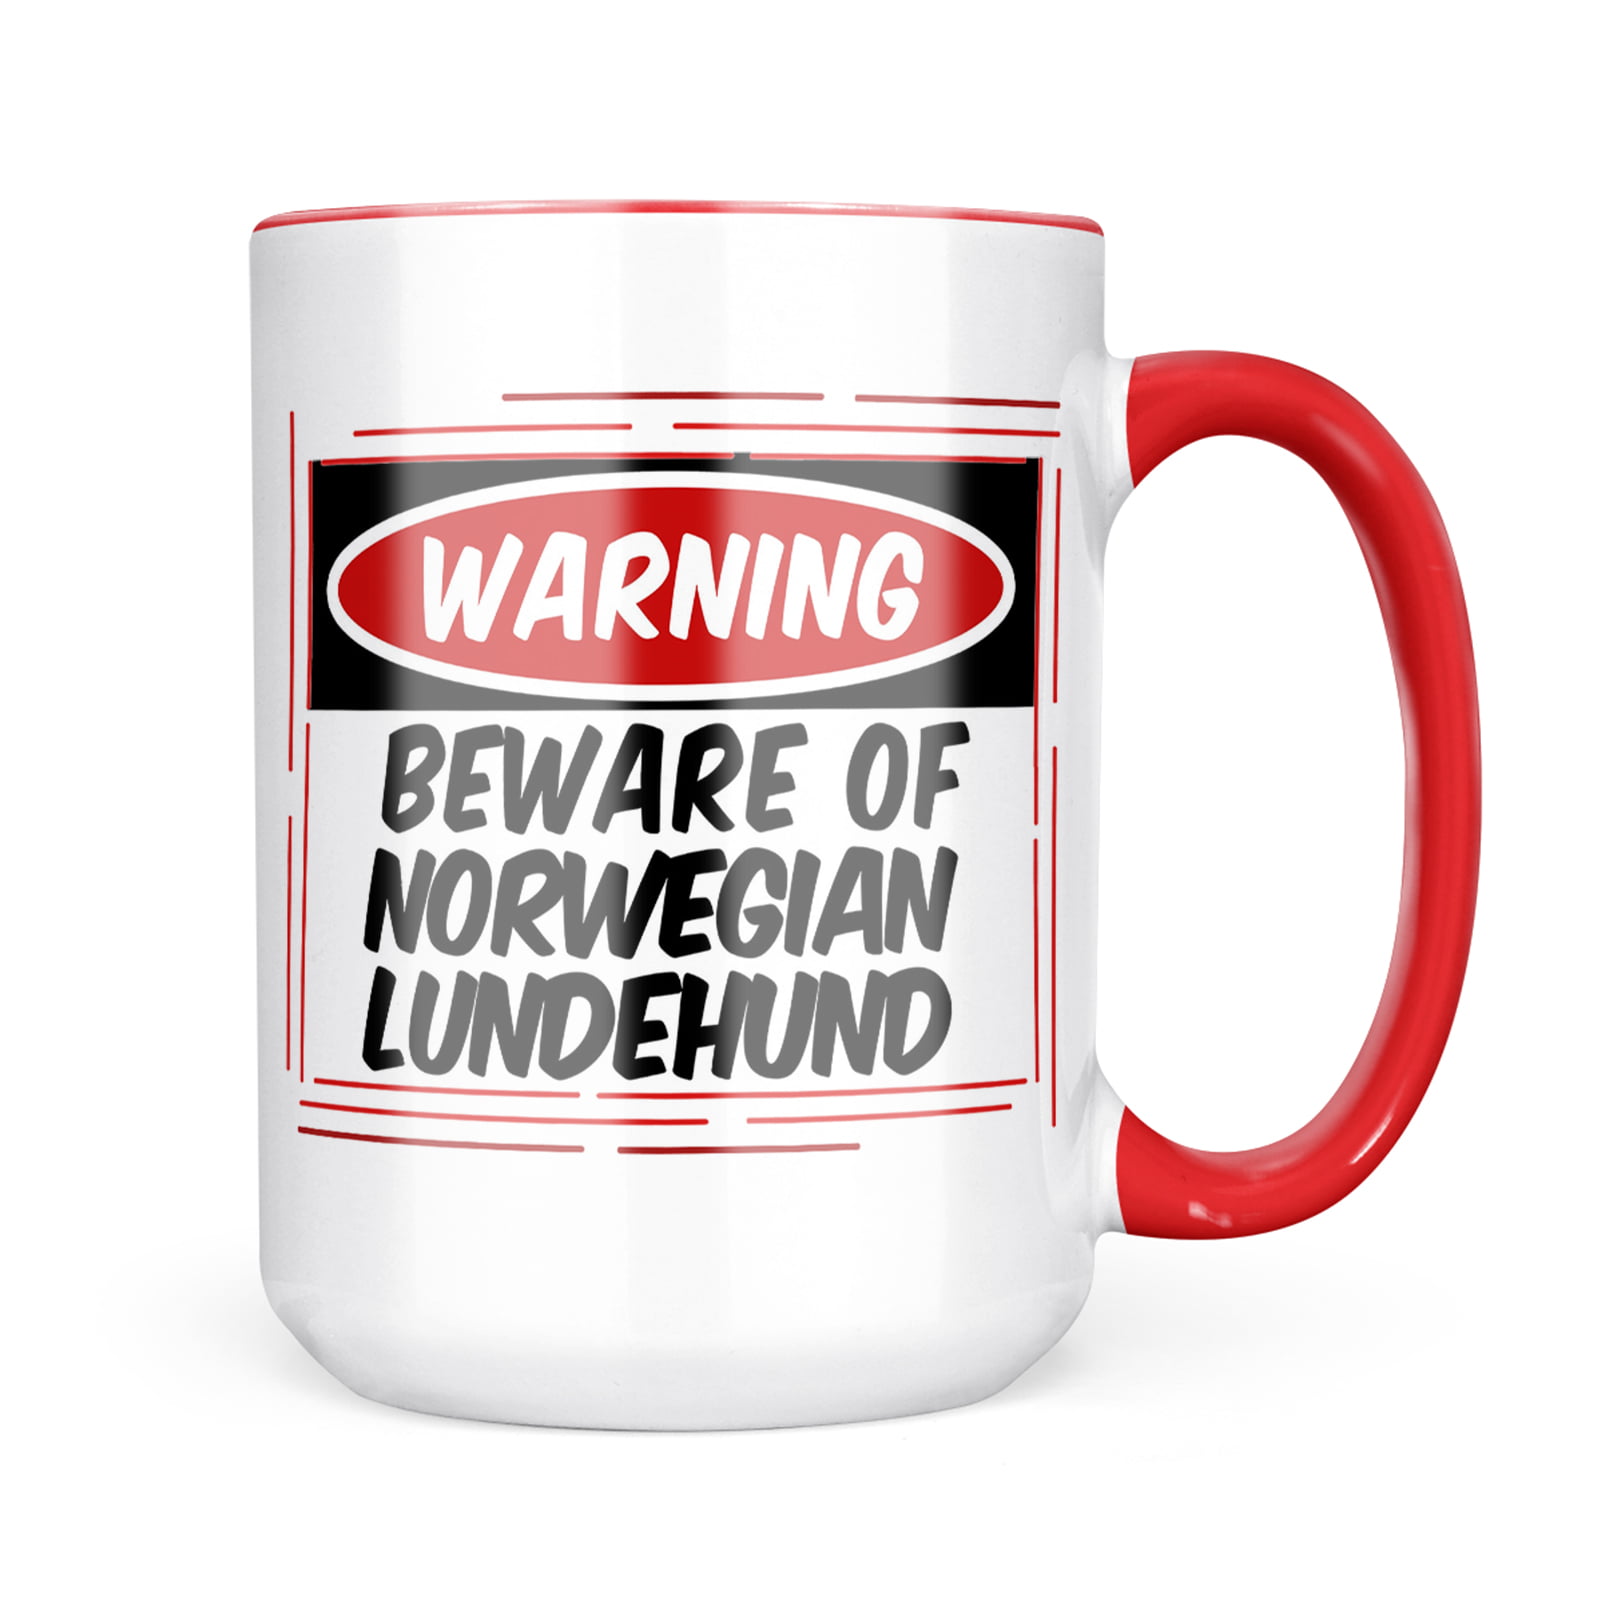 Norwegian Lundehund mug "I love" ceramic cup CA 